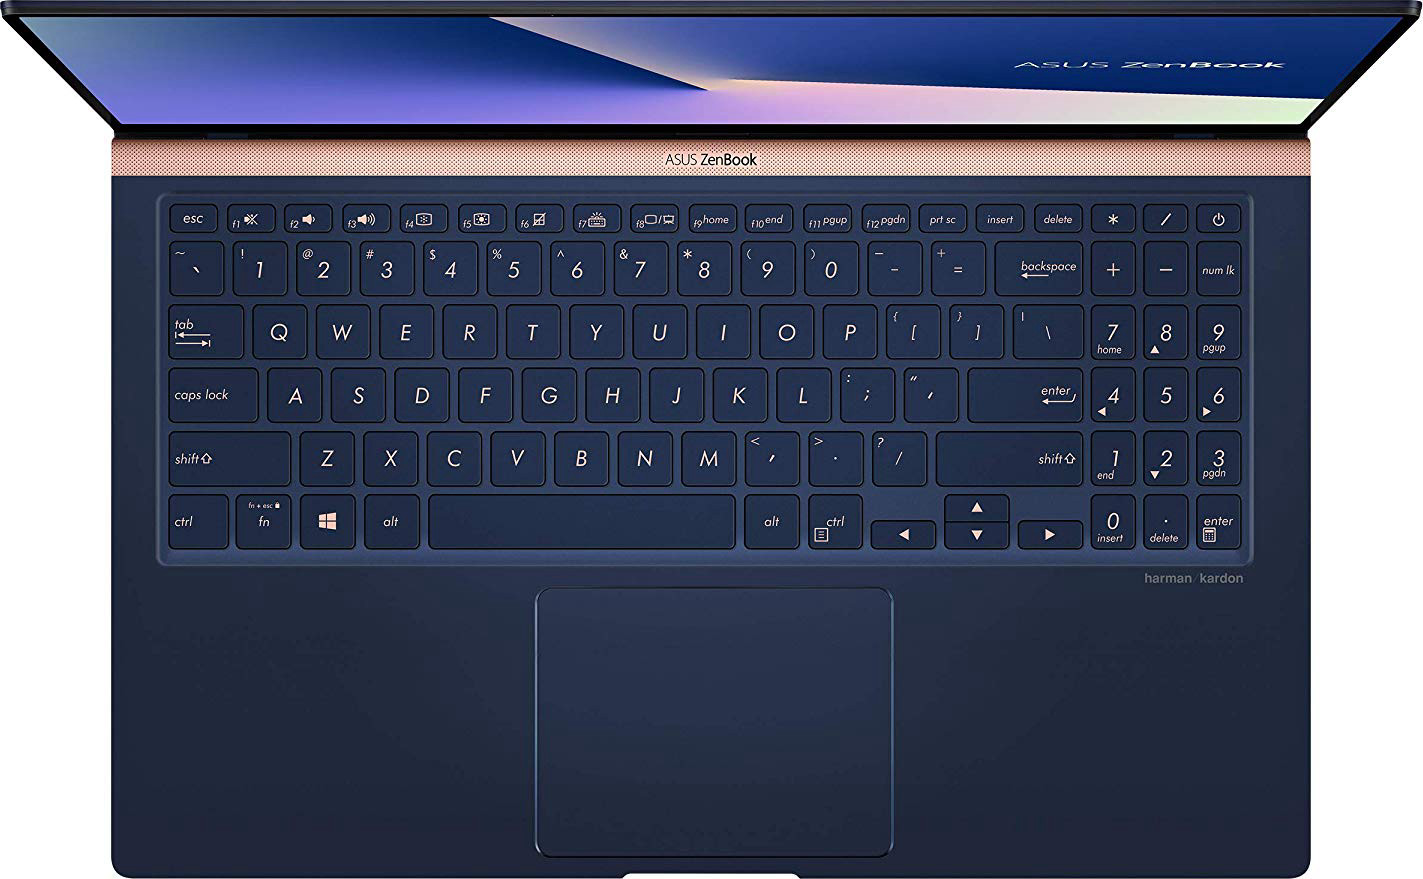 Asus ZenBook 15 Ultra Slim Compact Laptop 15.6” FHD 4-Way NanoEdge, Intel Core i7-8565U Processor, 16GB DDR4, 512GB PCIe SSD, GeForce GTX 1050, Ir Camera, Windows 10, UX533FD-DH74, Royal Blue